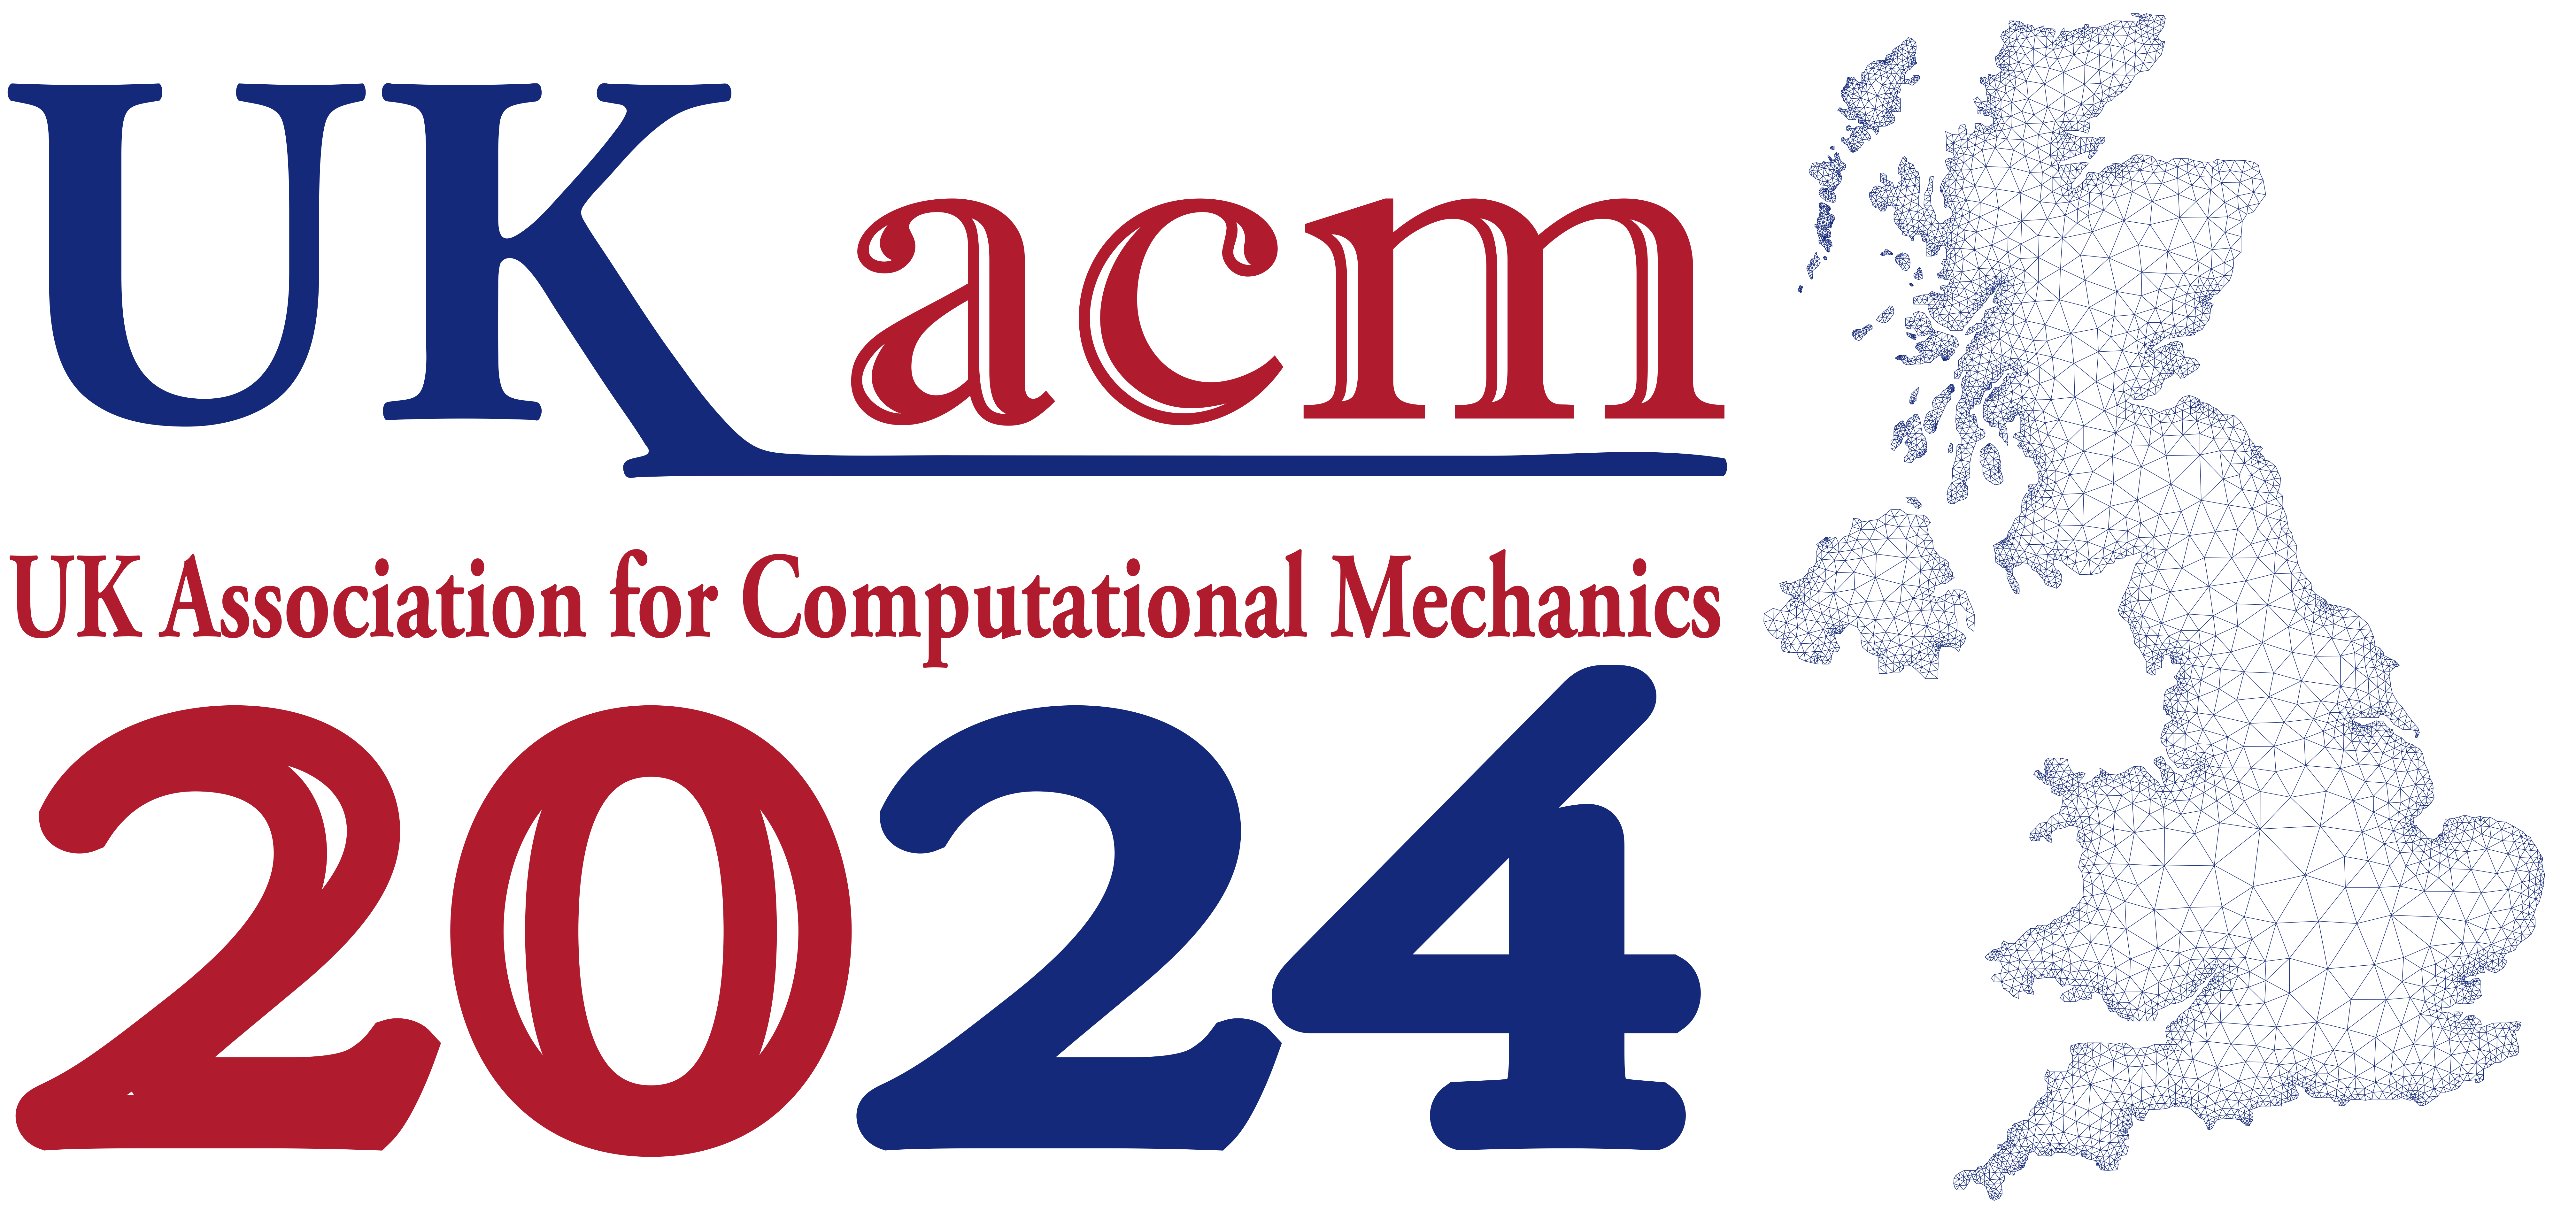 UK Association for Computational Mechanics 2024 Conference (UKACM 2024)